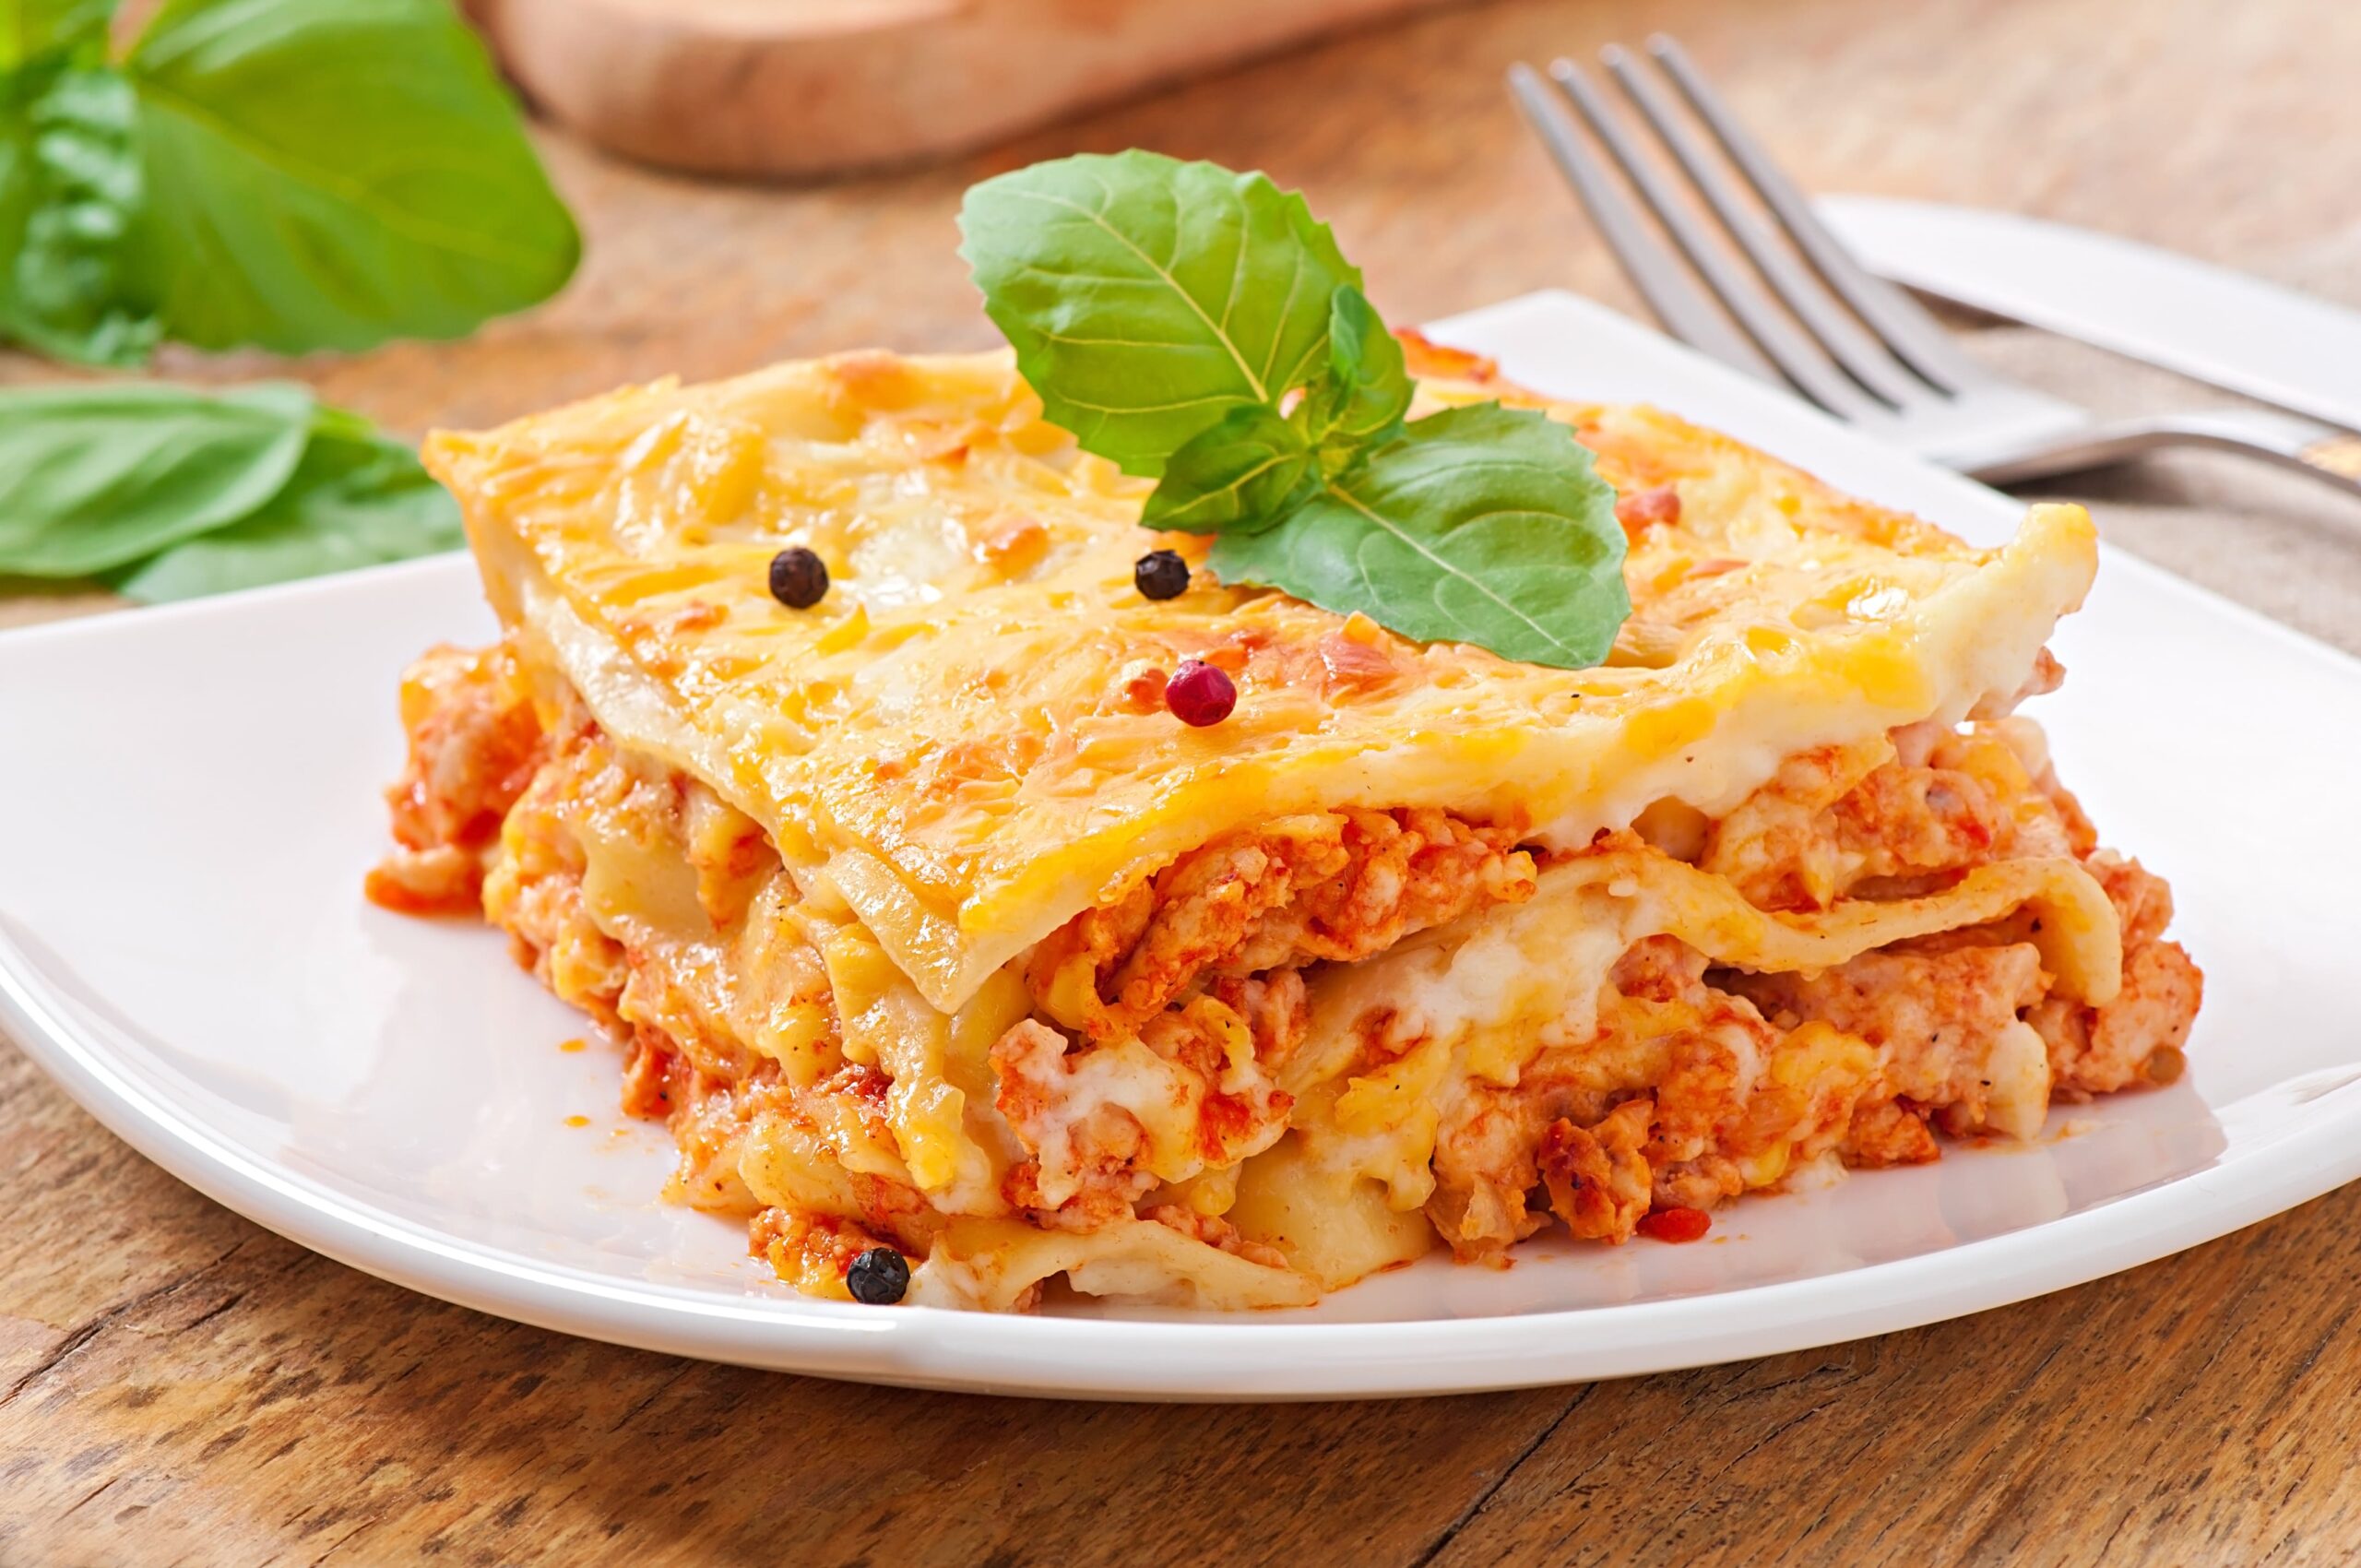 Homemade lasagna Prepare this delight